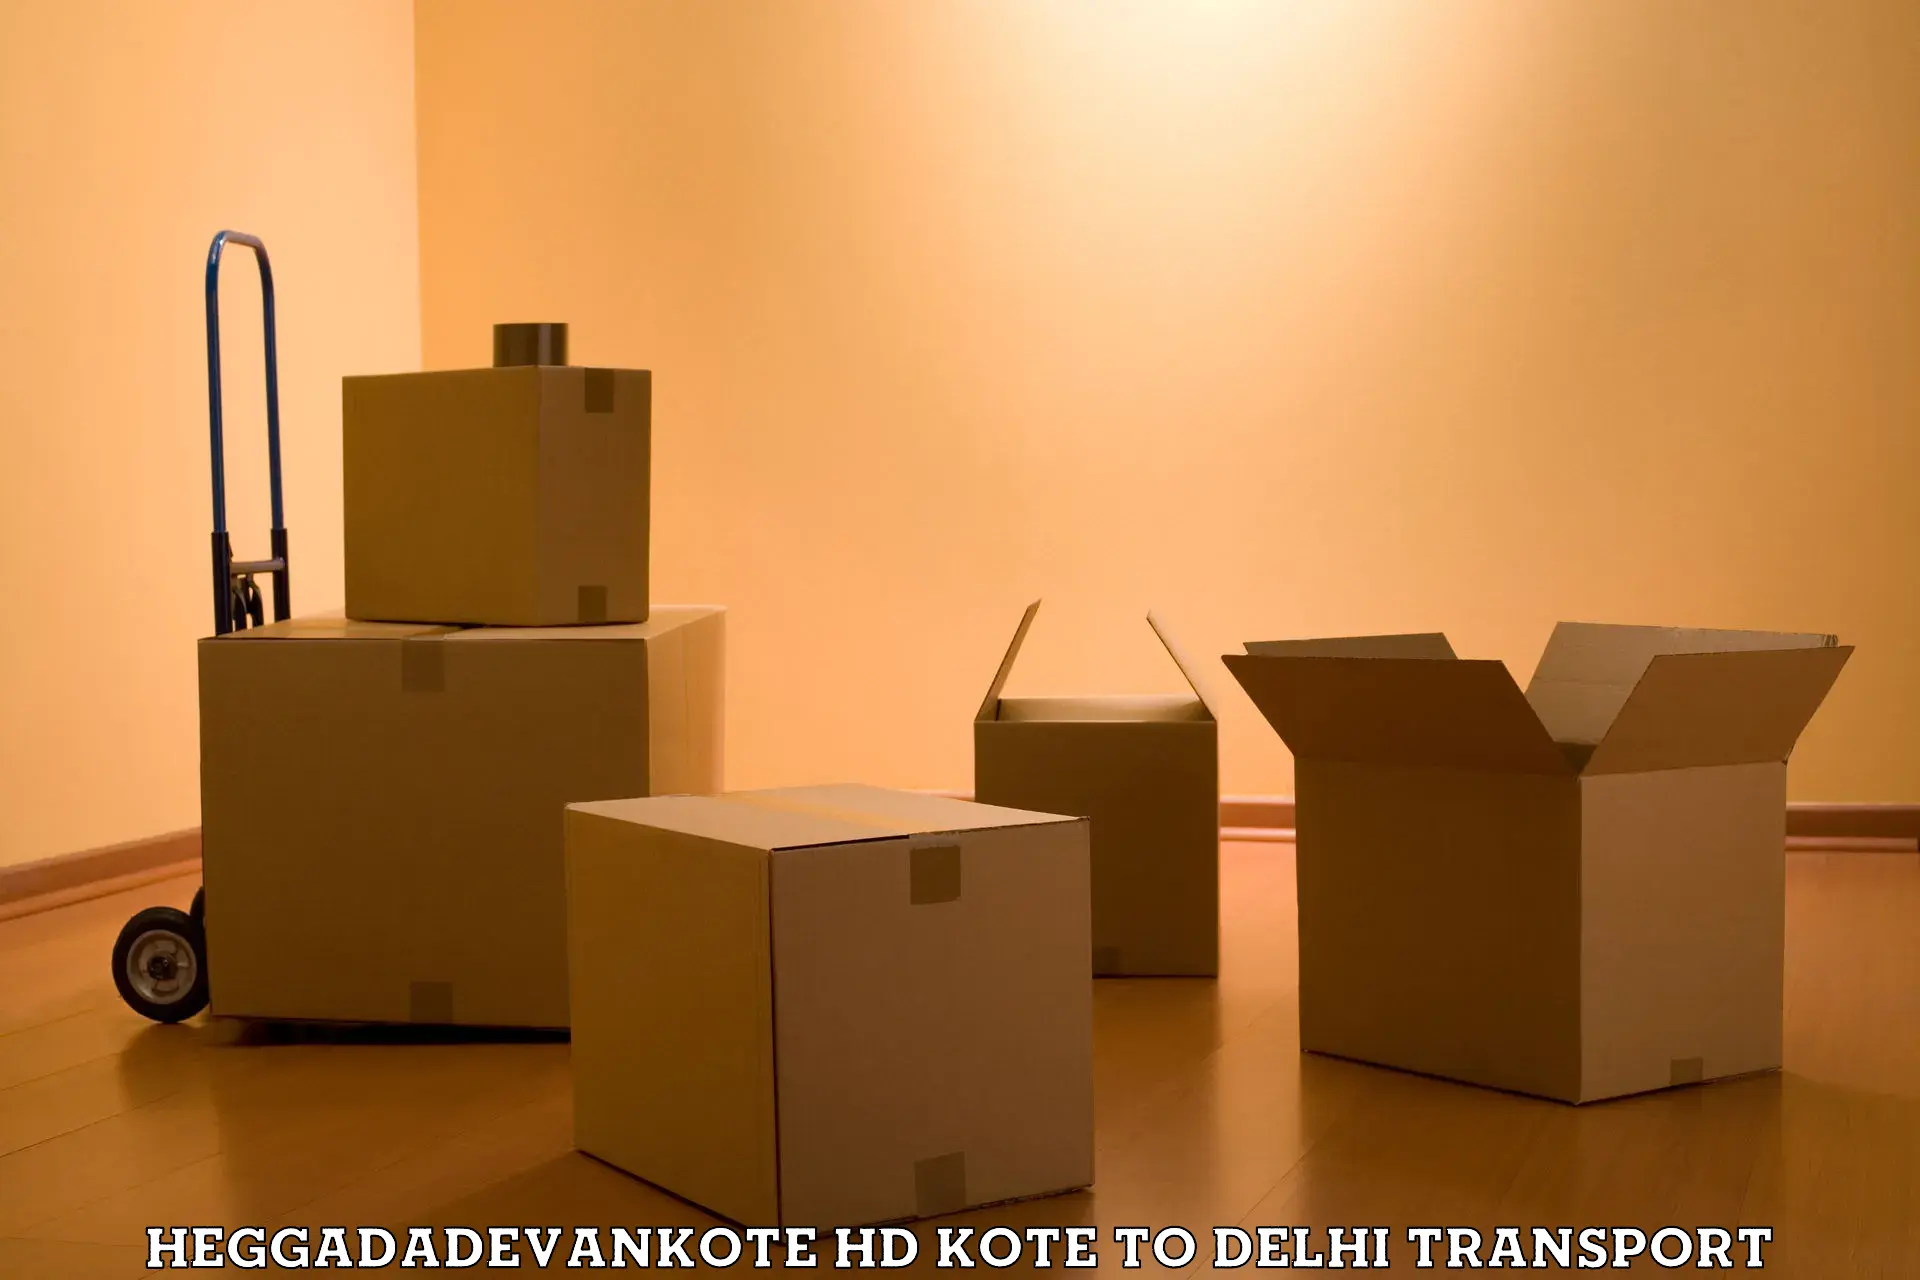 All India transport service Heggadadevankote HD Kote to East Delhi